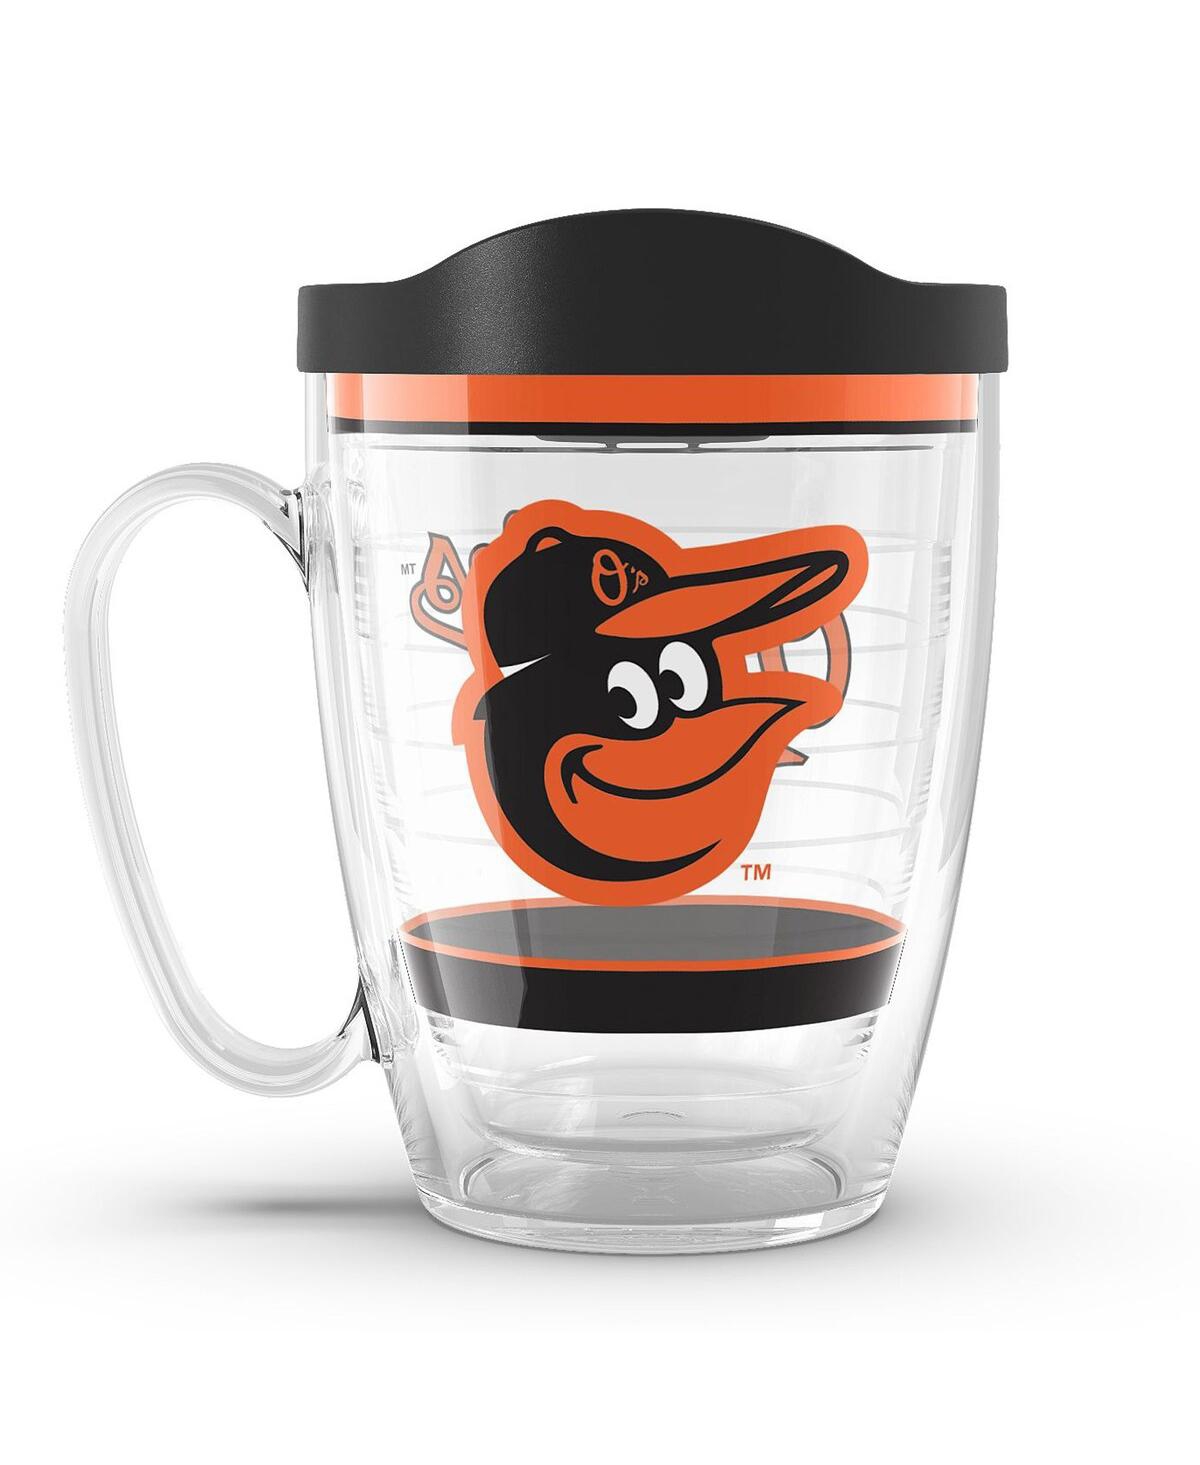 Tervis Tumbler Baltimore Orioles 16 oz Tradition Classic Mug In Multi